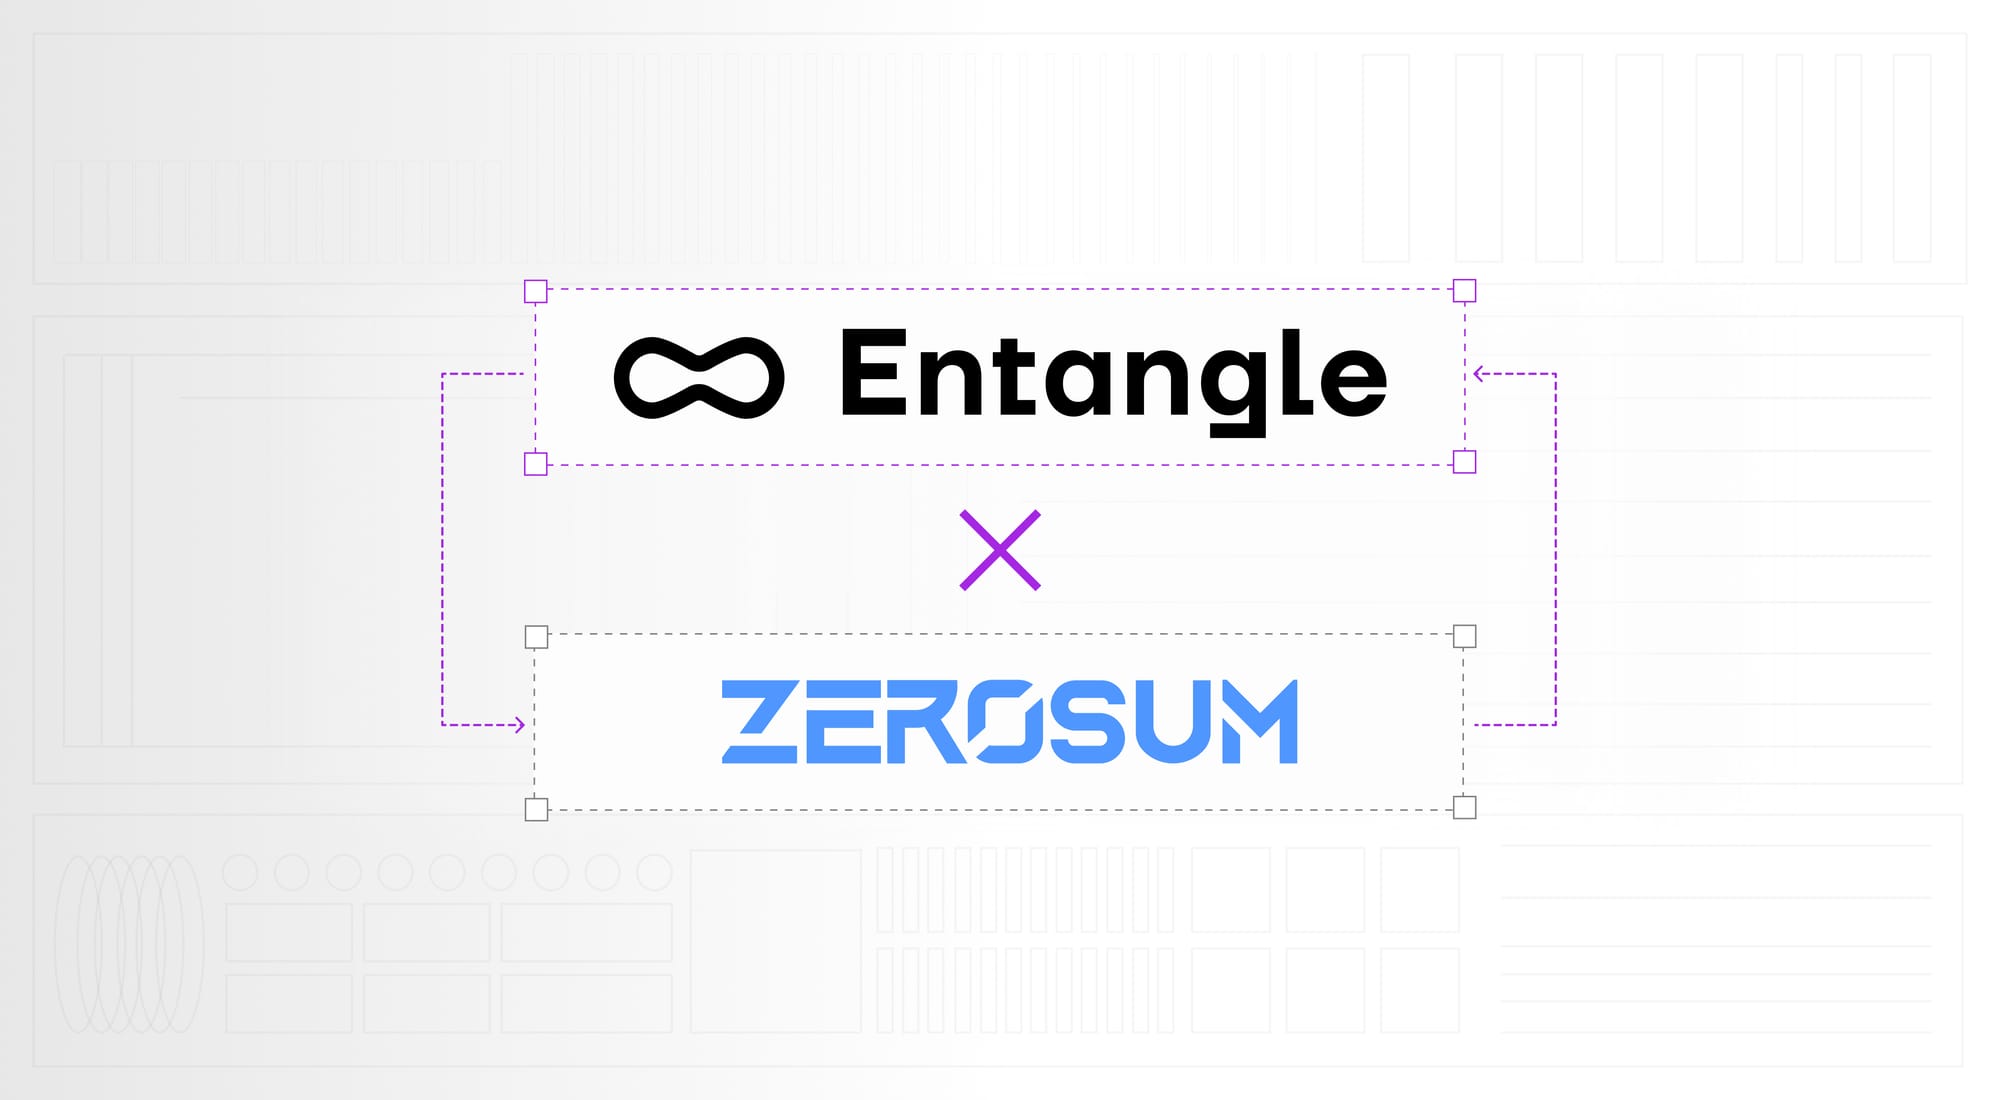 Entangle x Zerosum